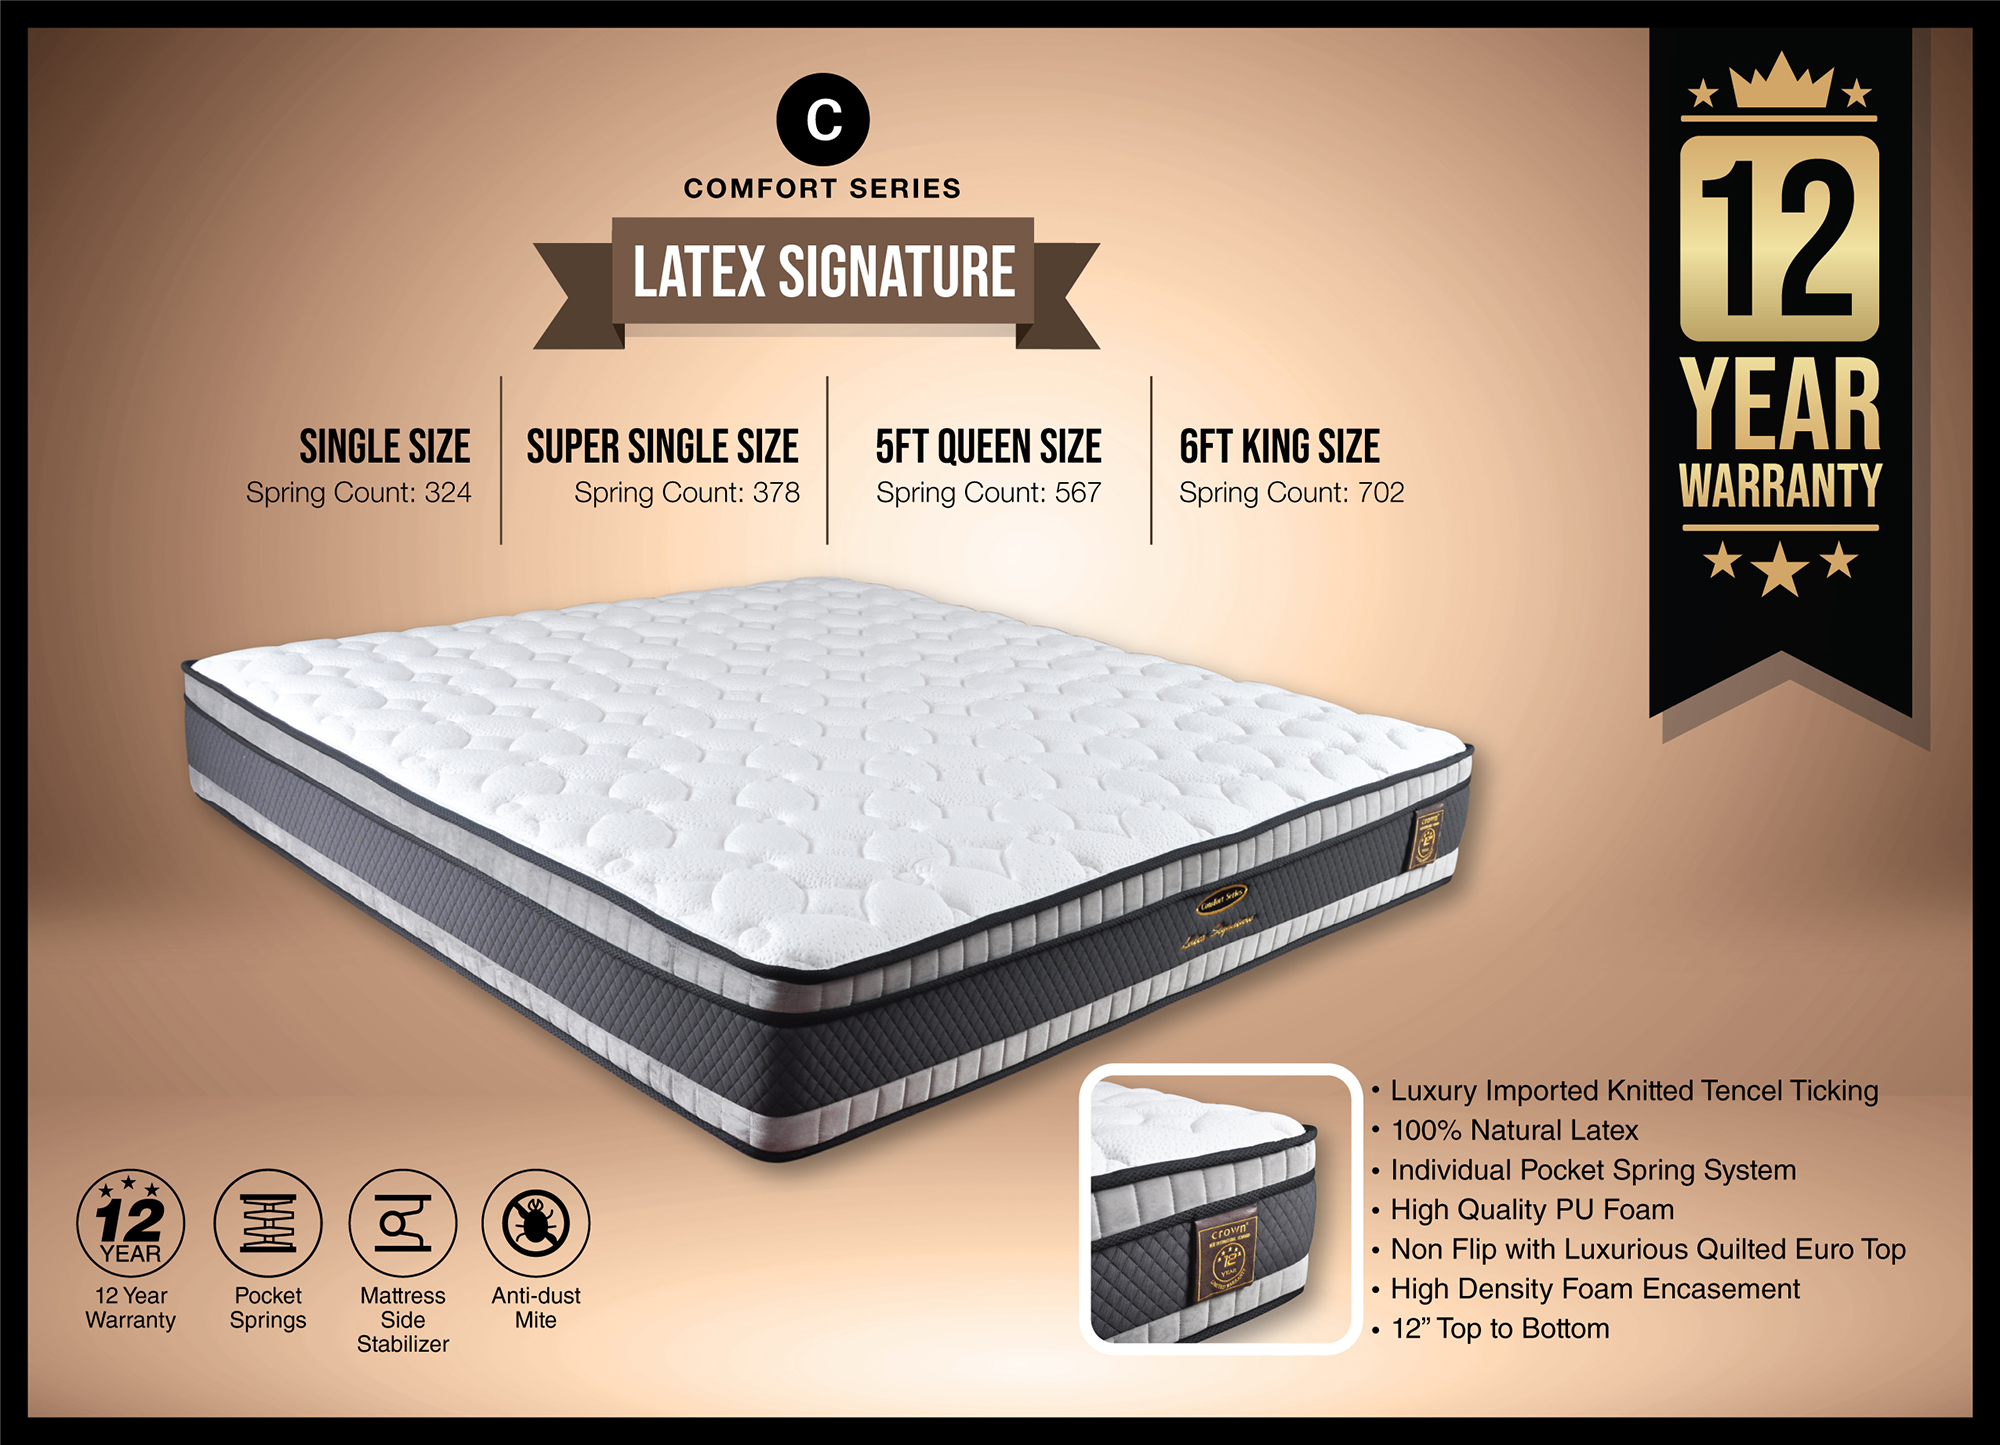 weight of king size latex mattress